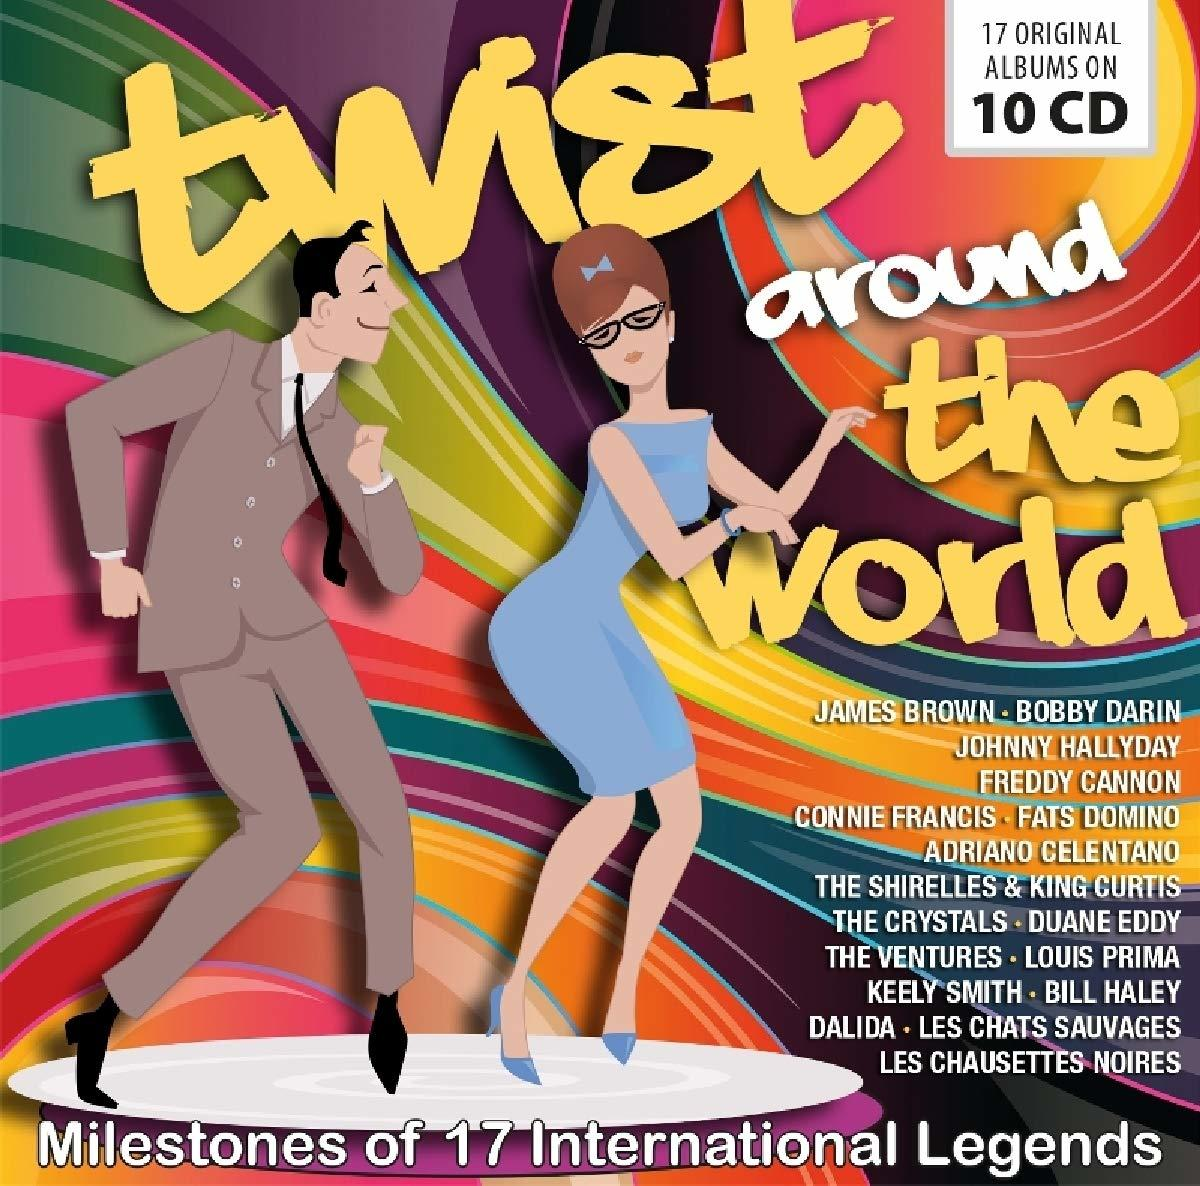 Around World (CD) Twist - VARIOUS - The